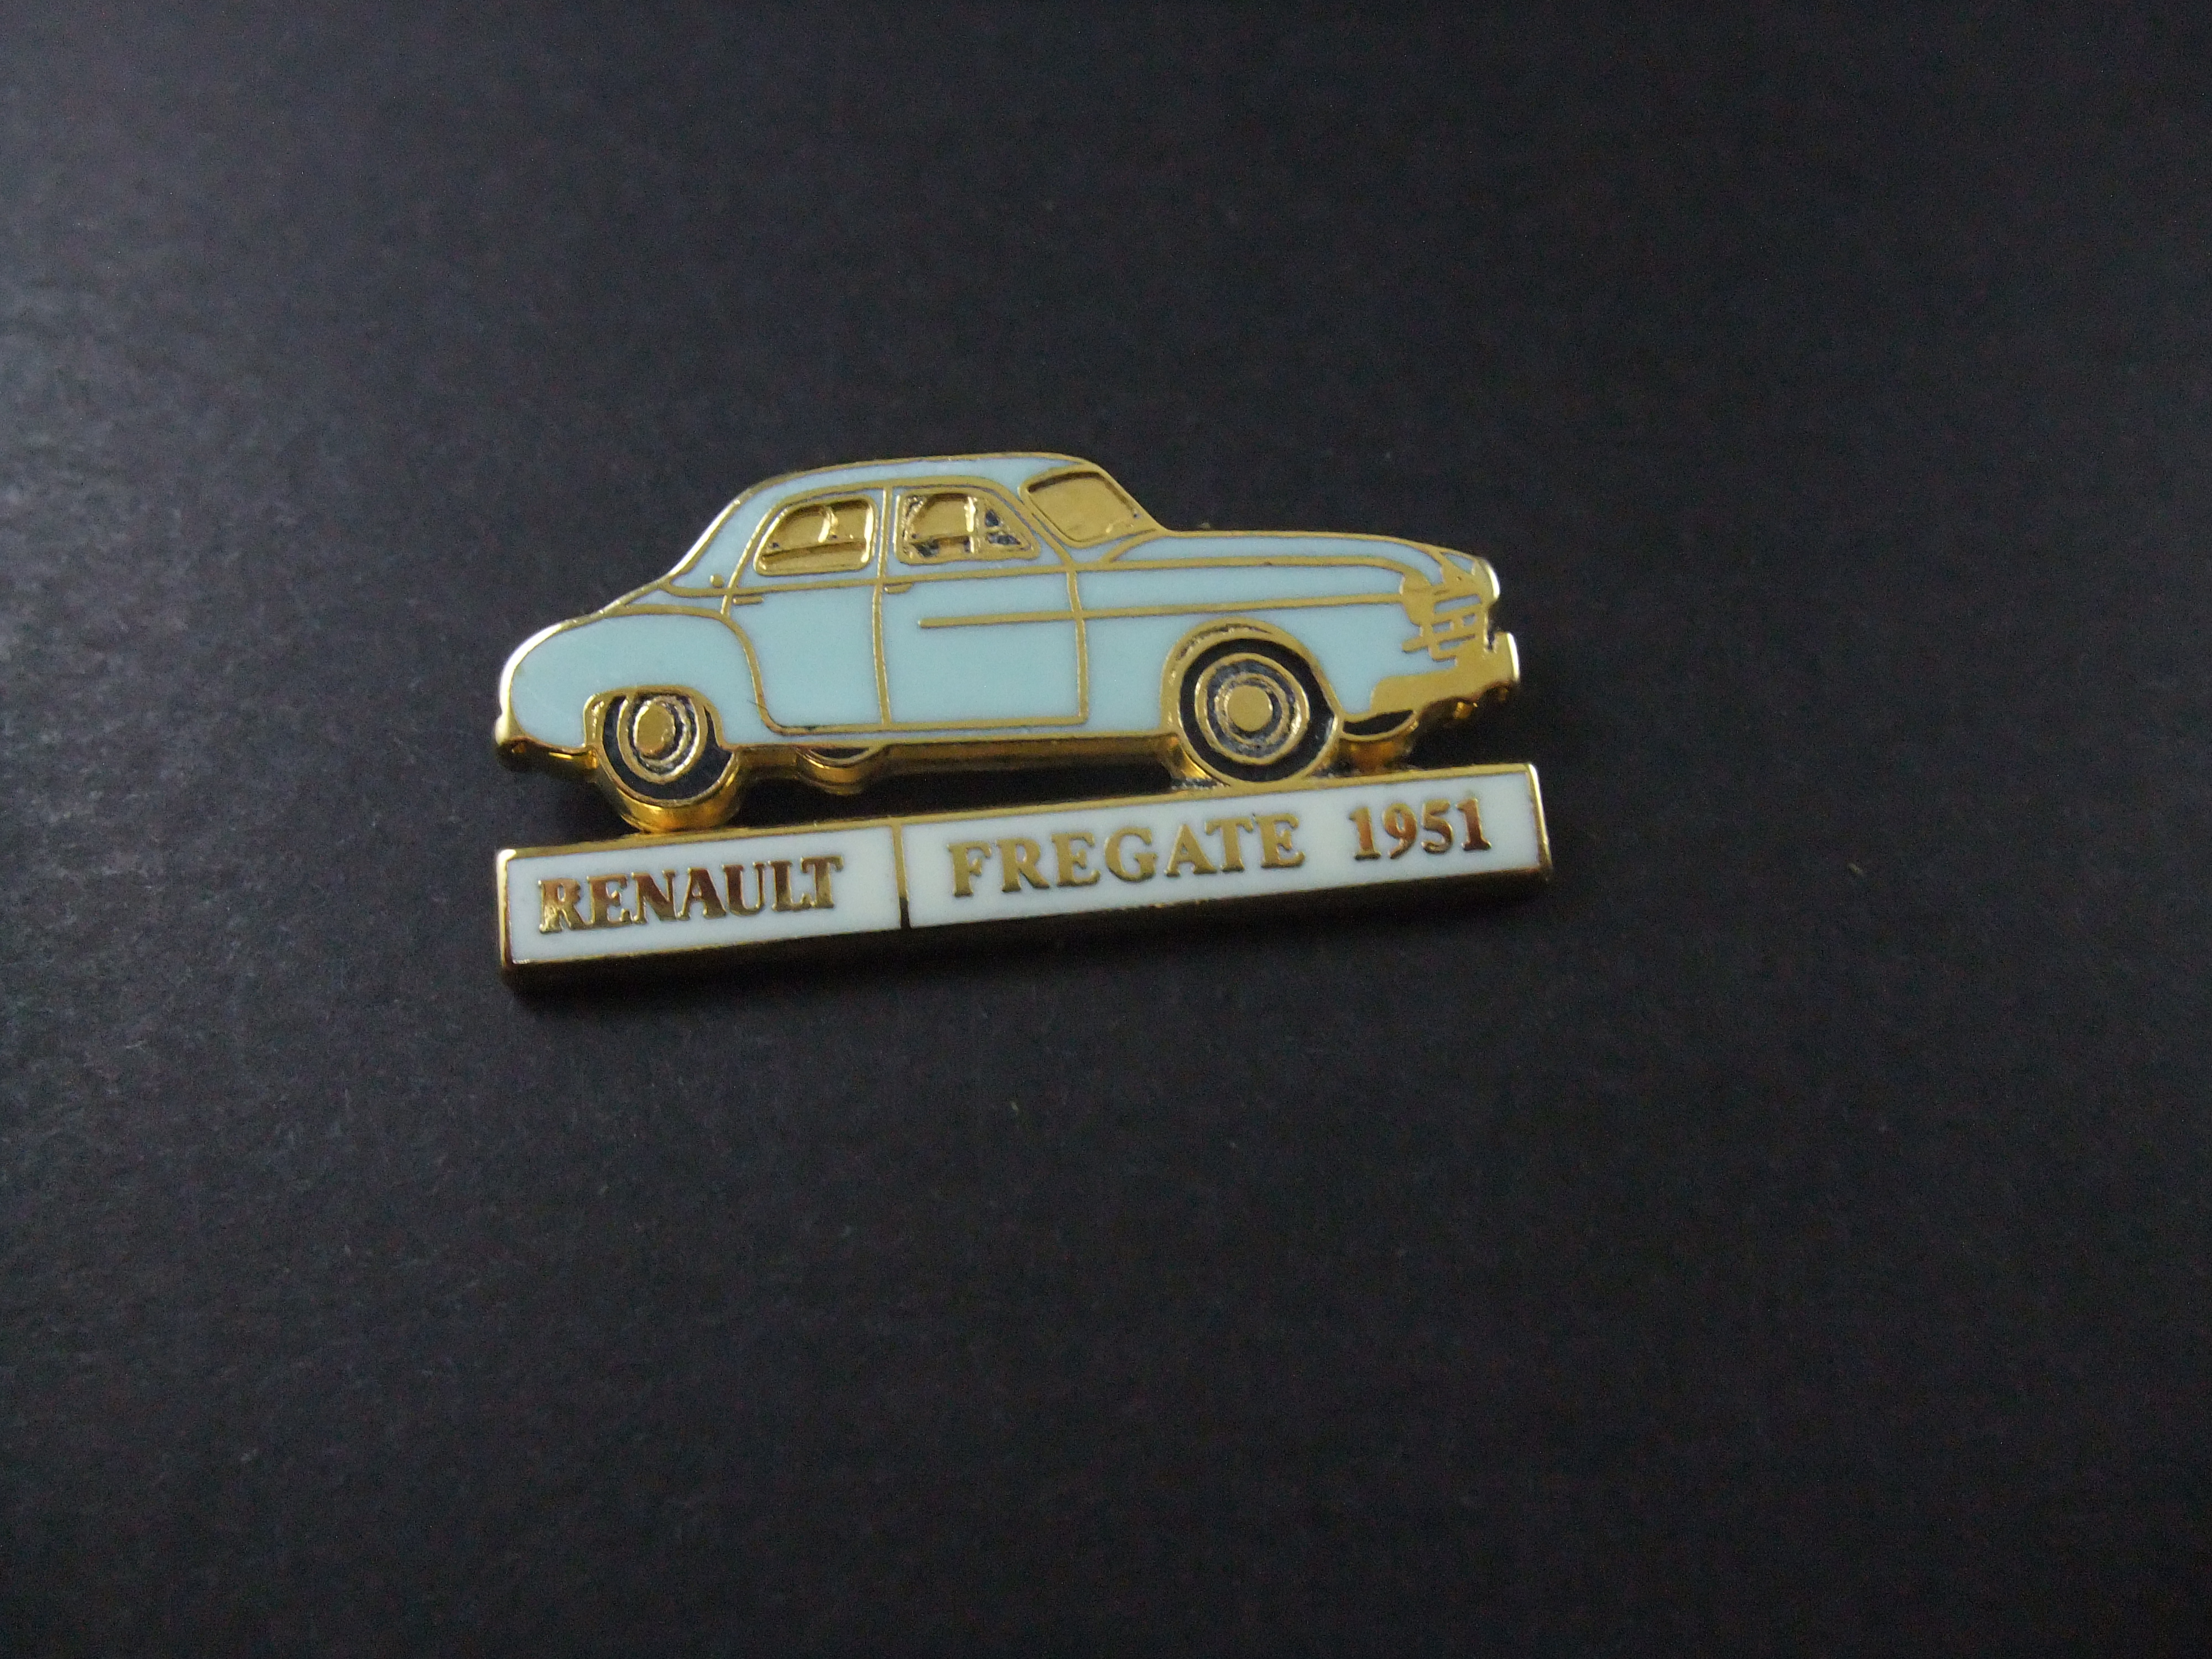 Renault Frégate hogere middenklasse auto 1951